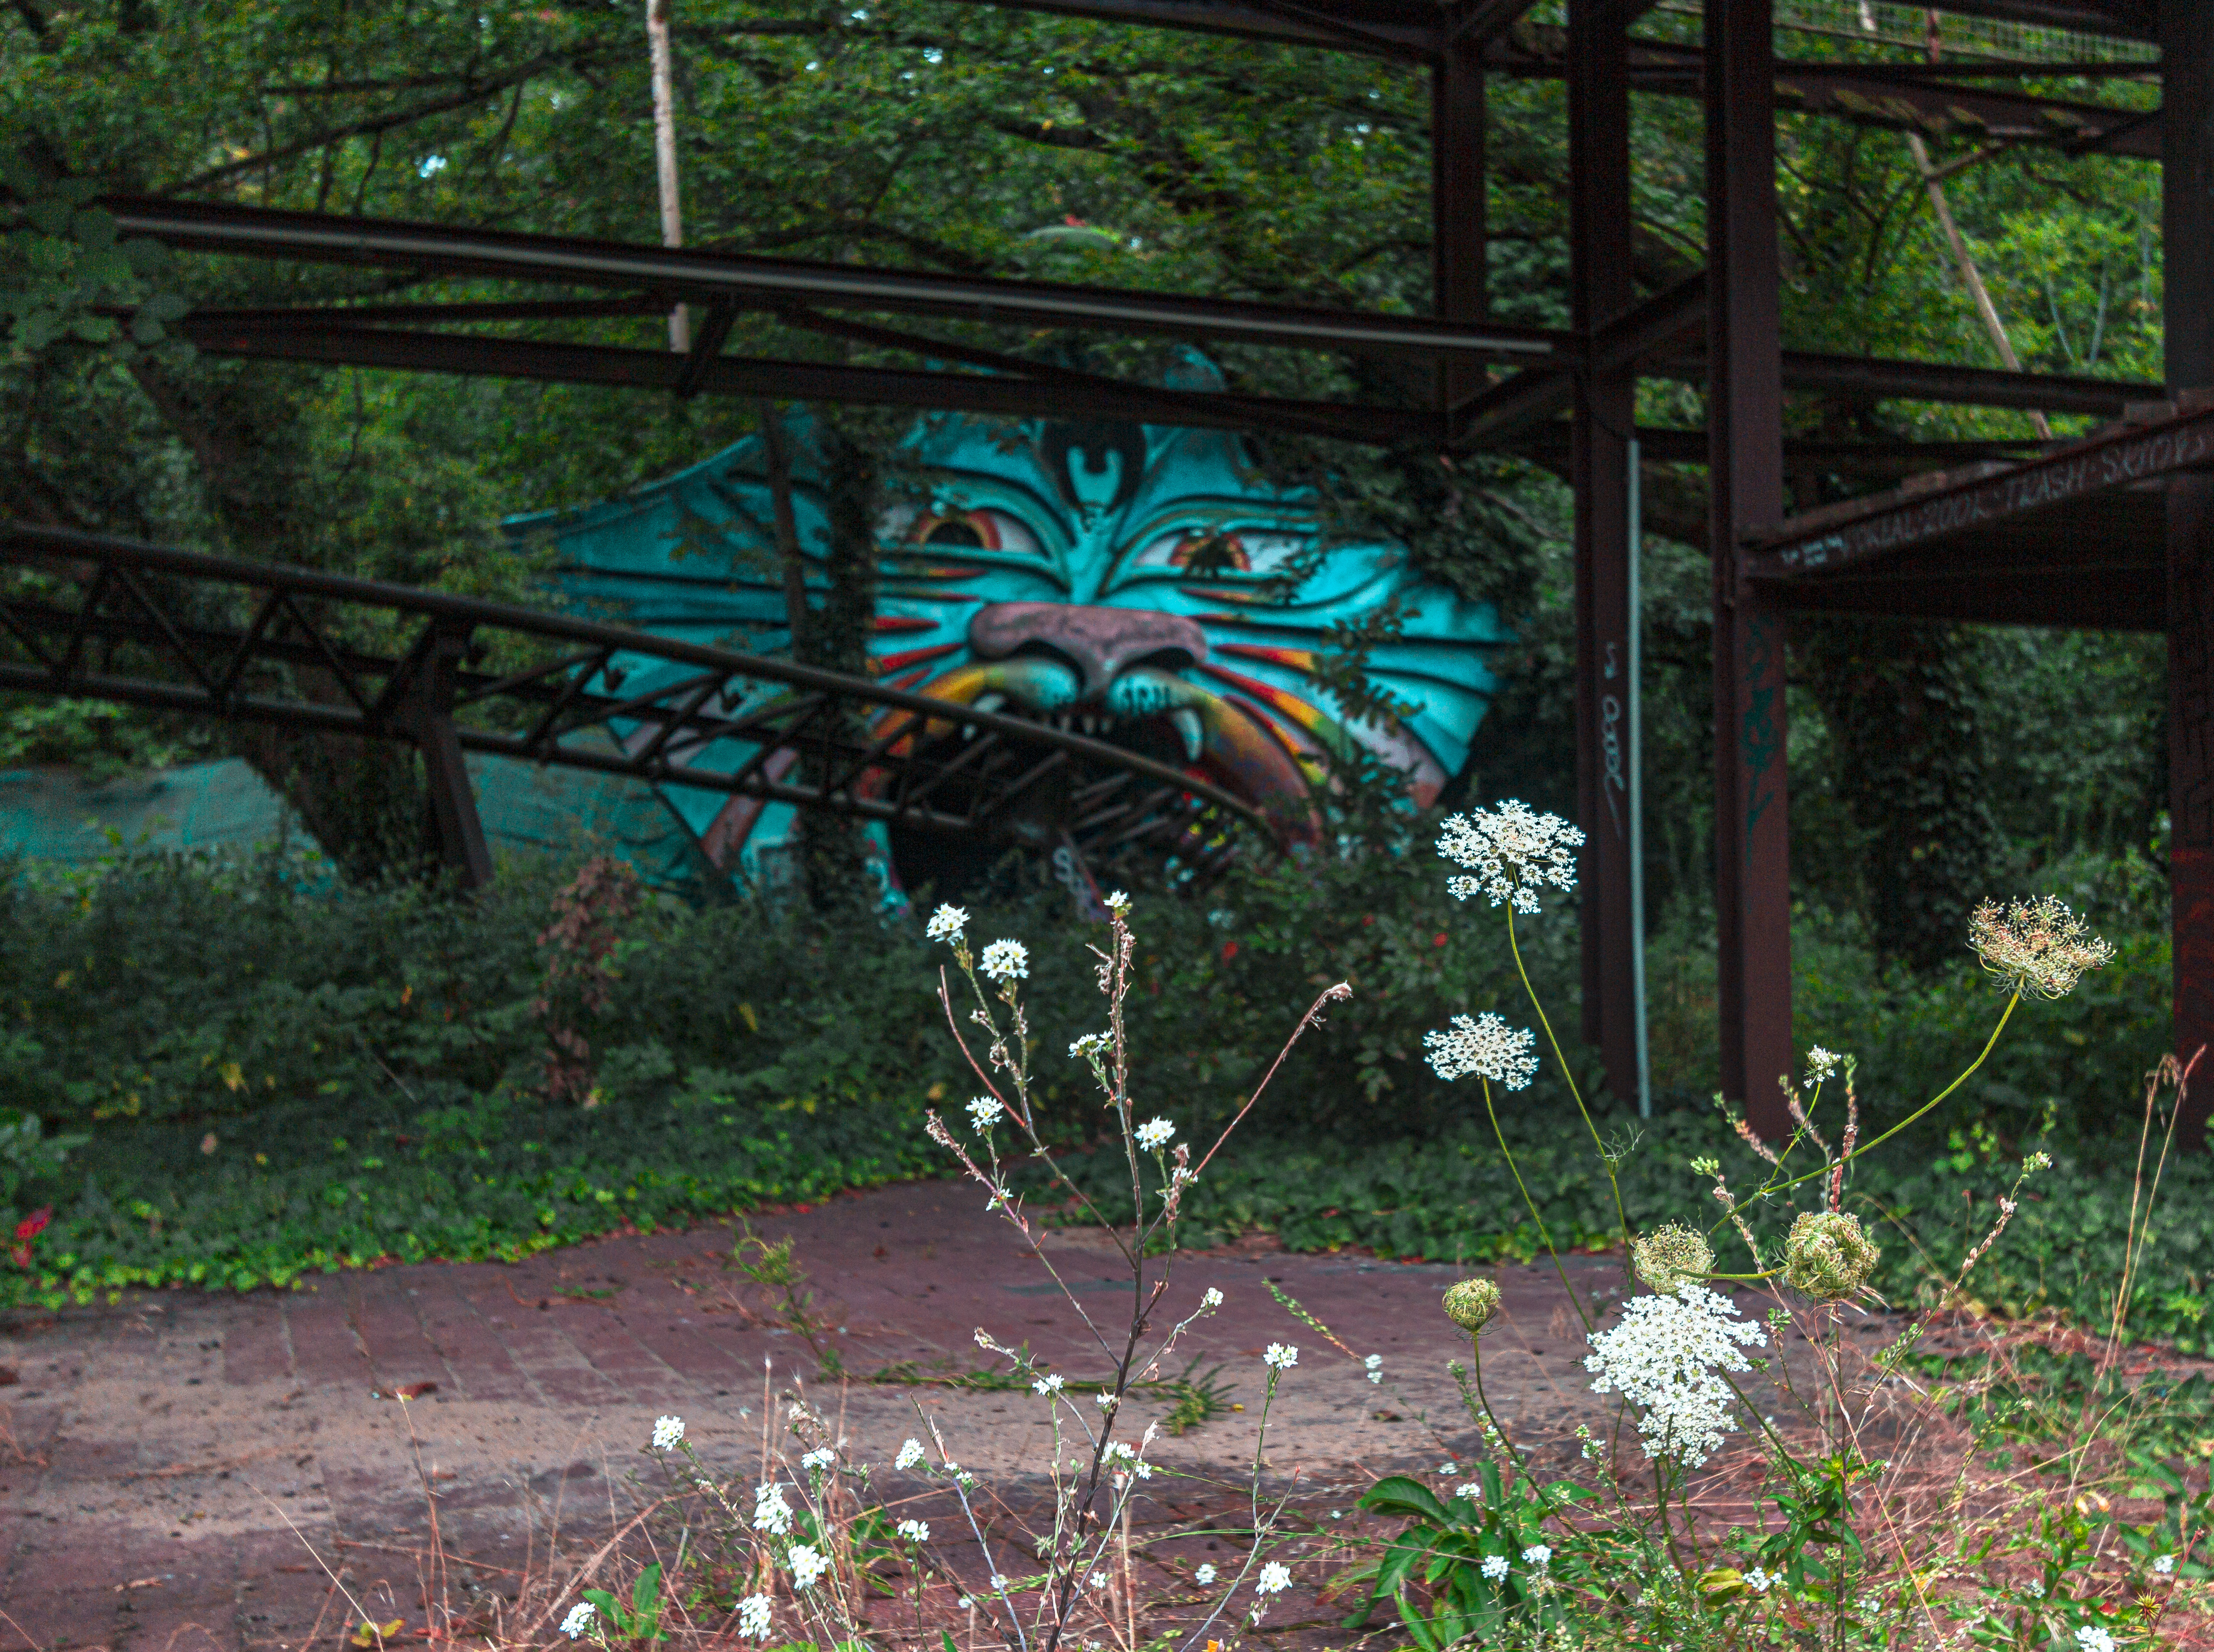 Dragon in Berlin's Abandoned Amusement Park